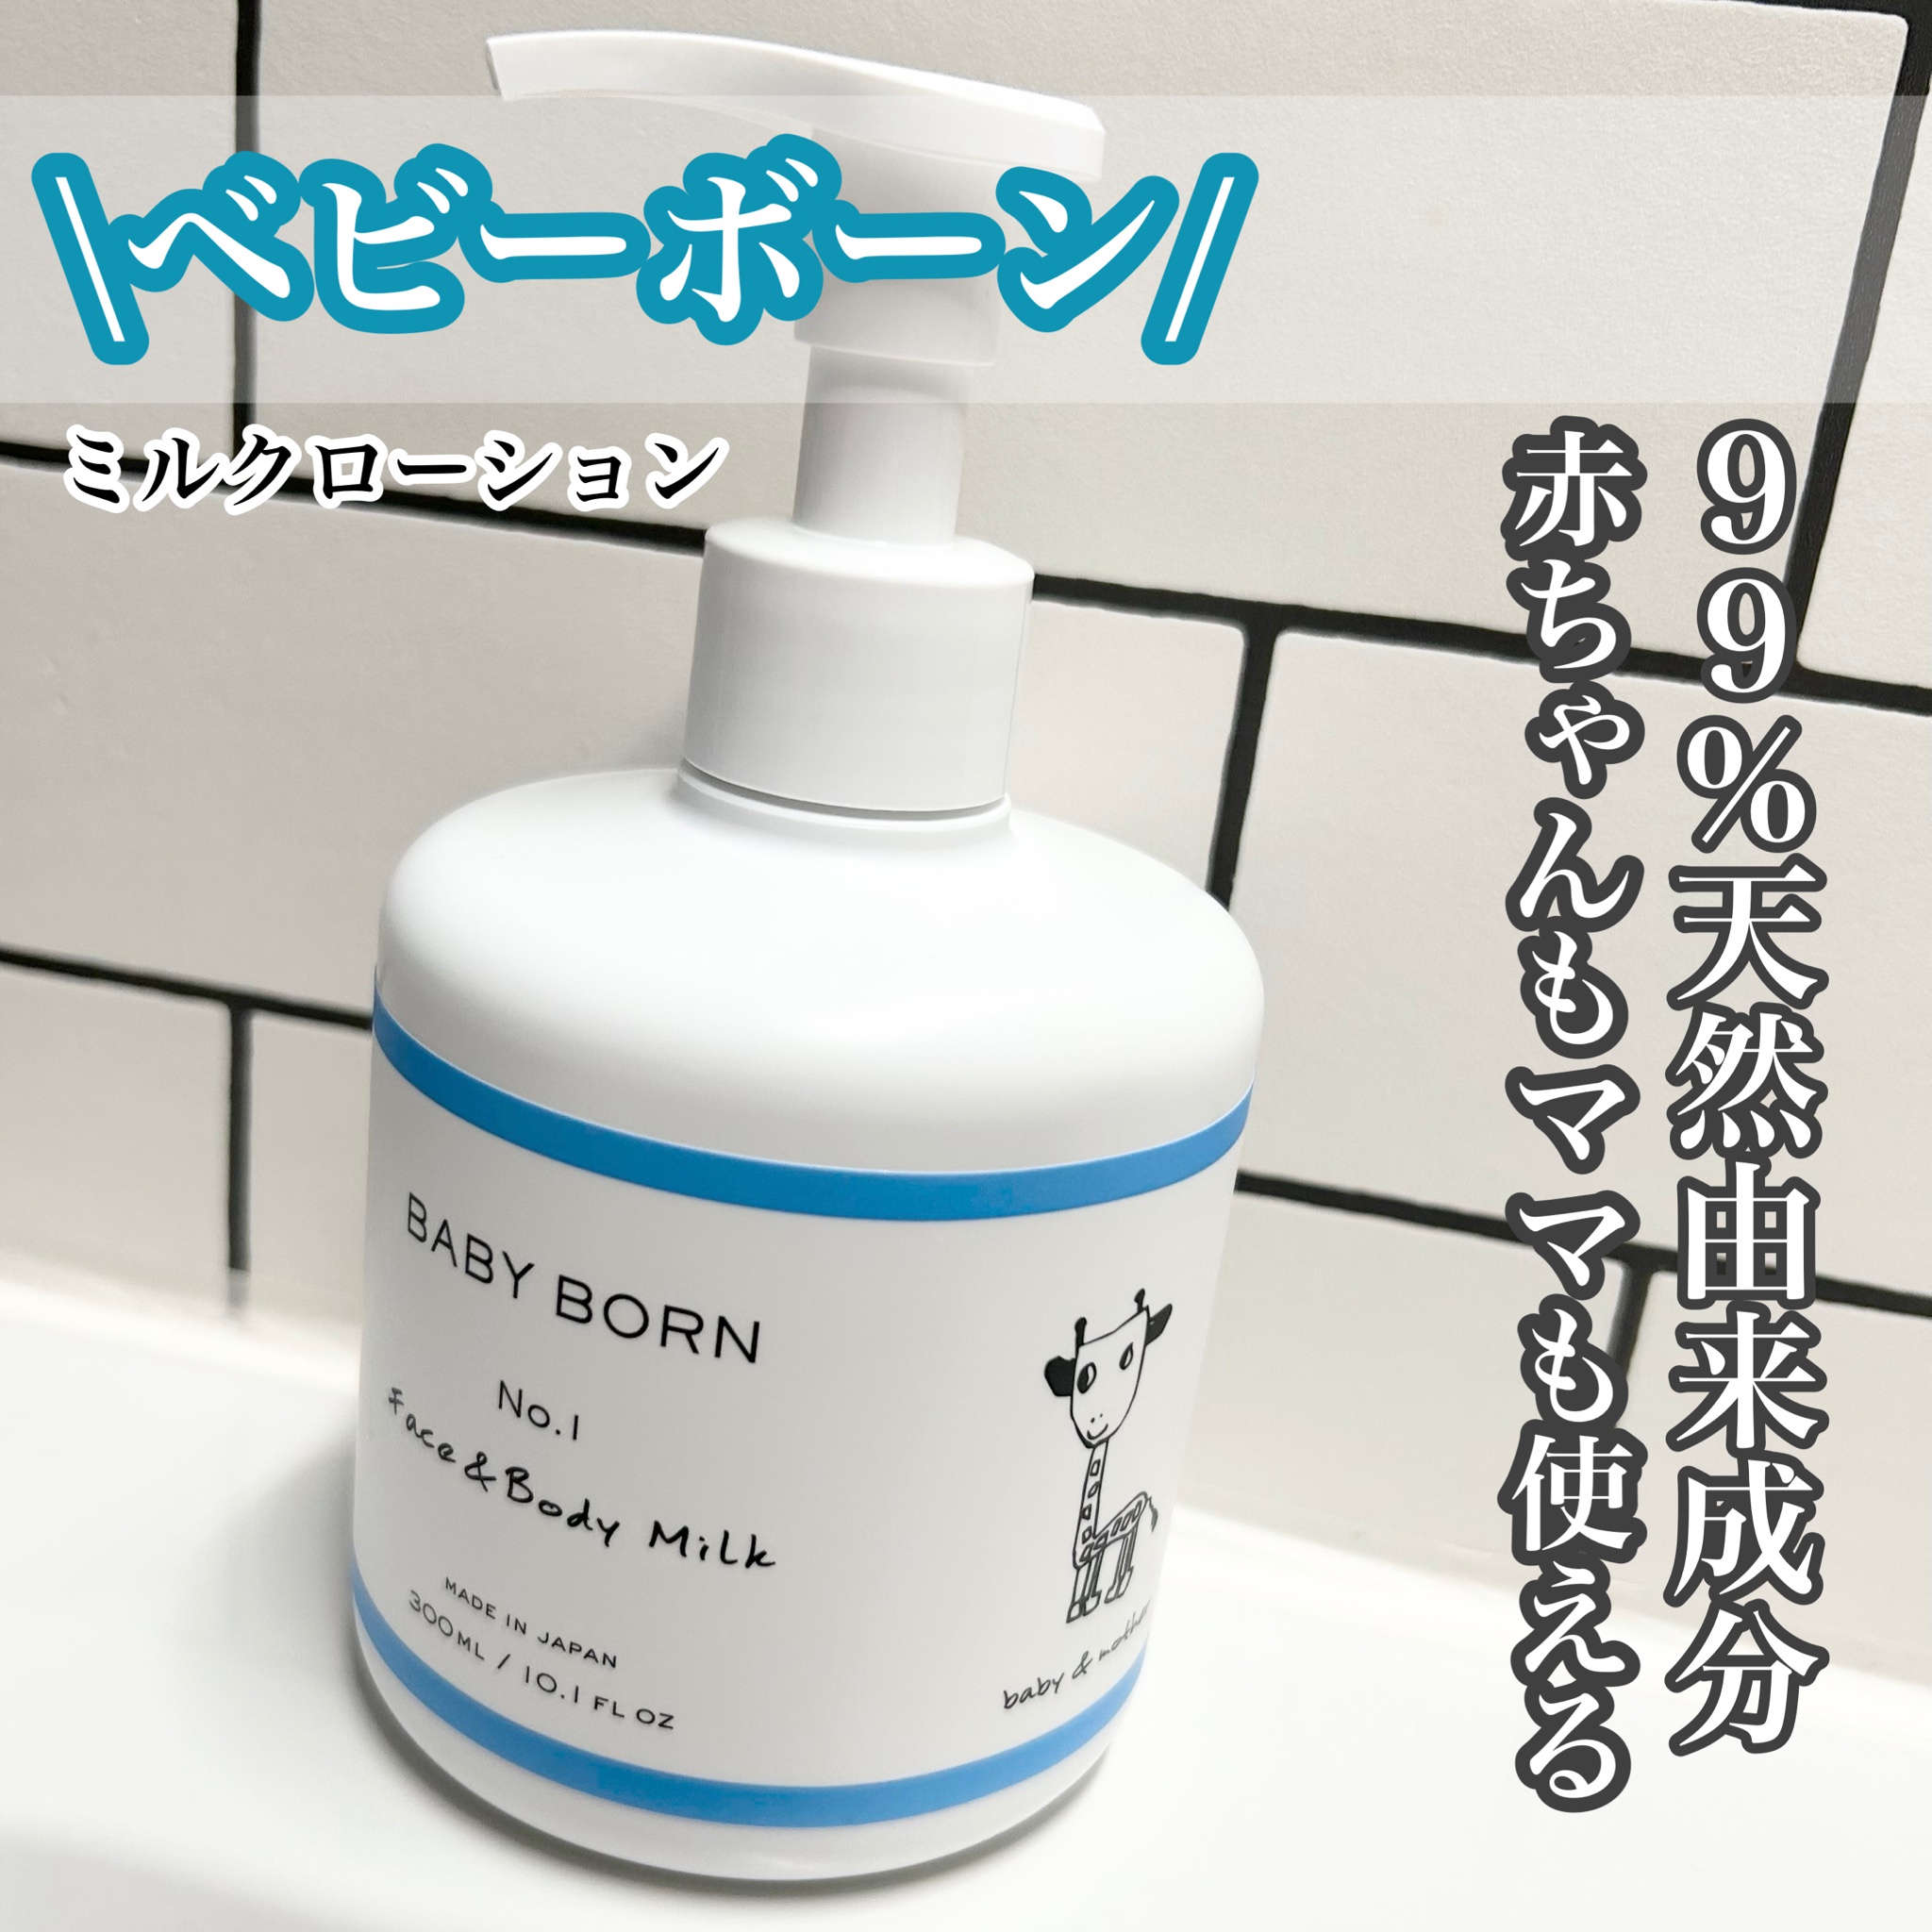 BABY BORN / Face&Body Milkの公式商品情報｜美容・化粧品情報はアット 